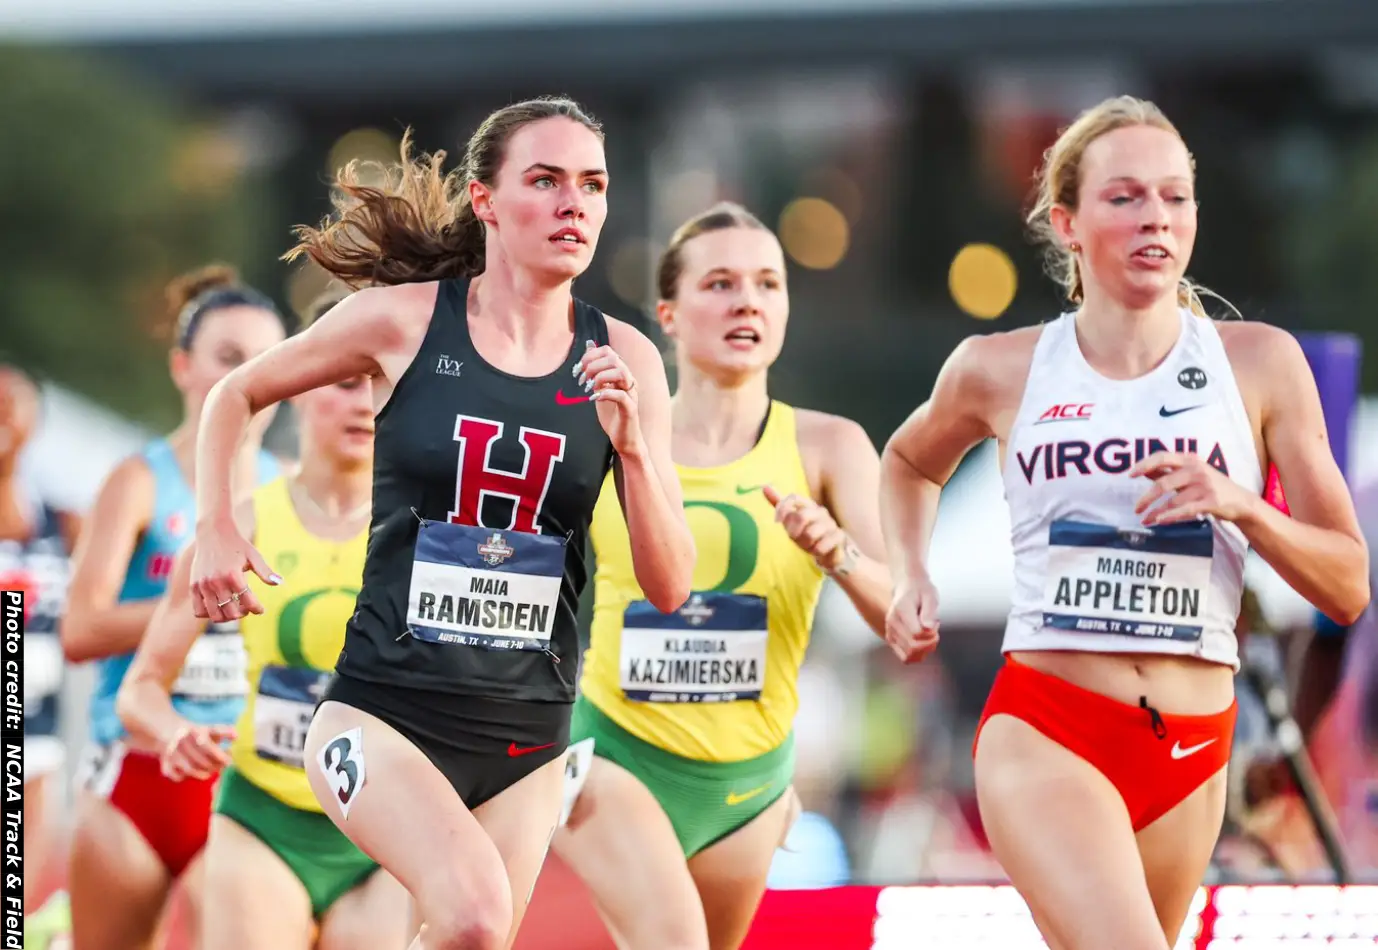 Havard star Maia Ramsden wins NCAA Championships 1500m